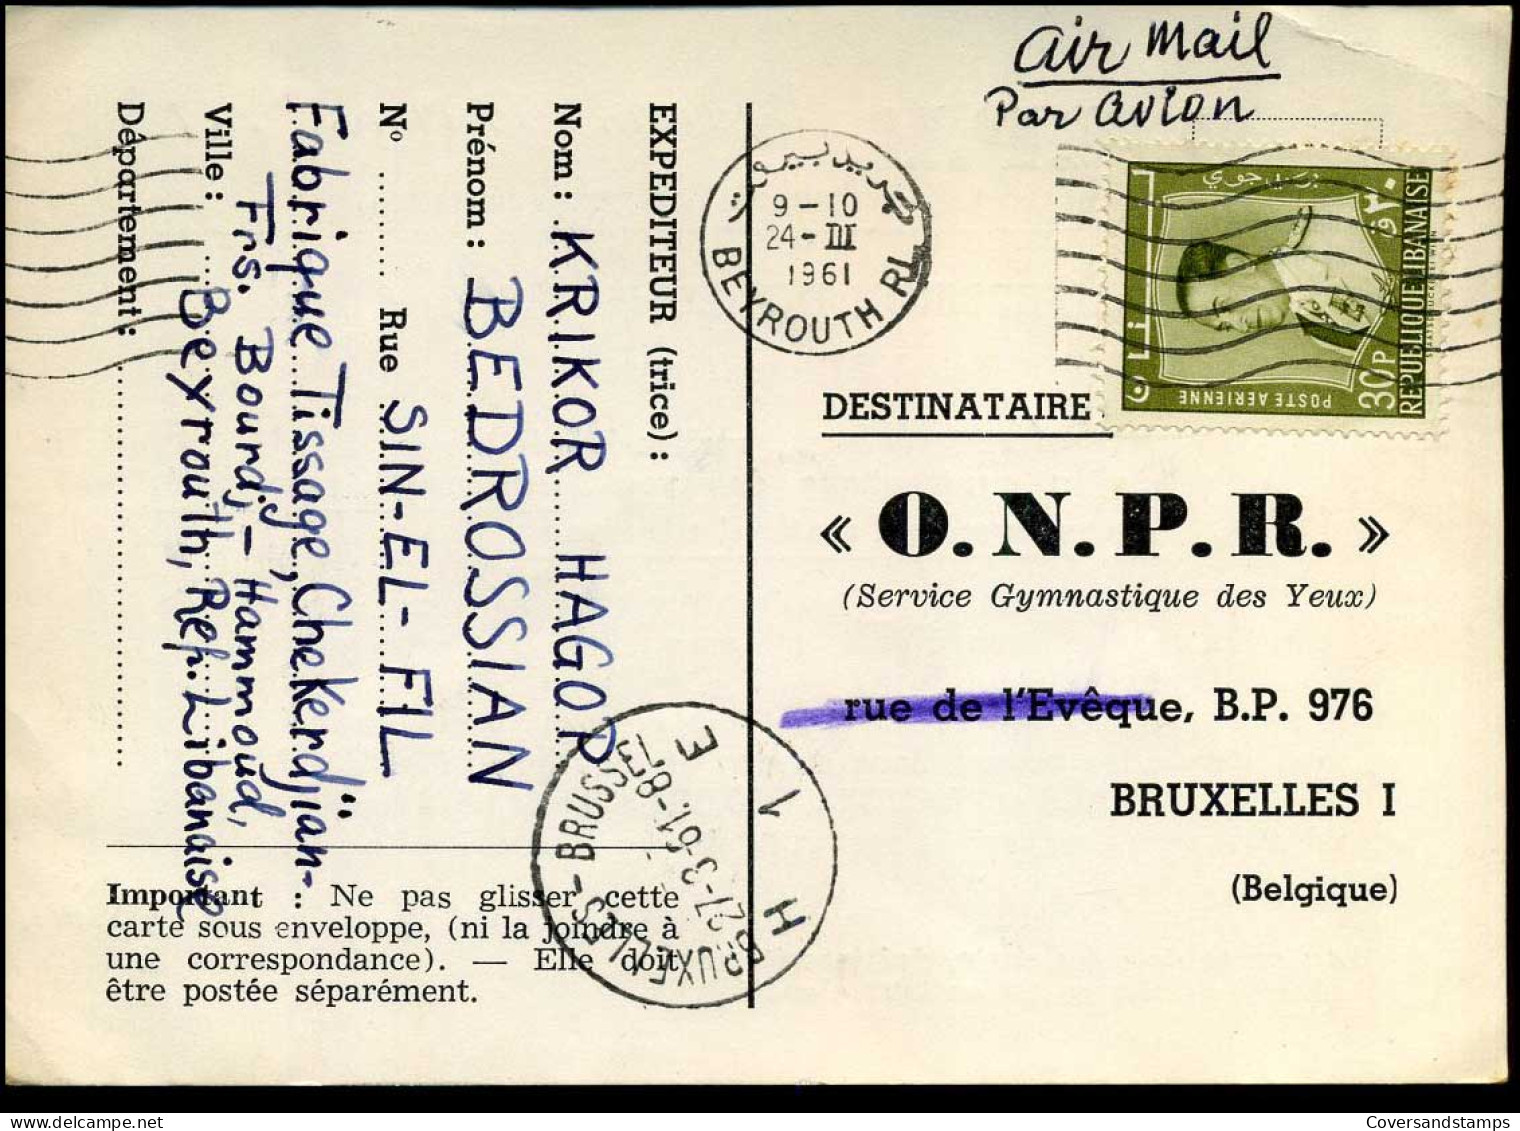 Postcard - To Bruxelles, Belgium -- "O.N.P.R., Bruxelles, Belgium" - Lebanon